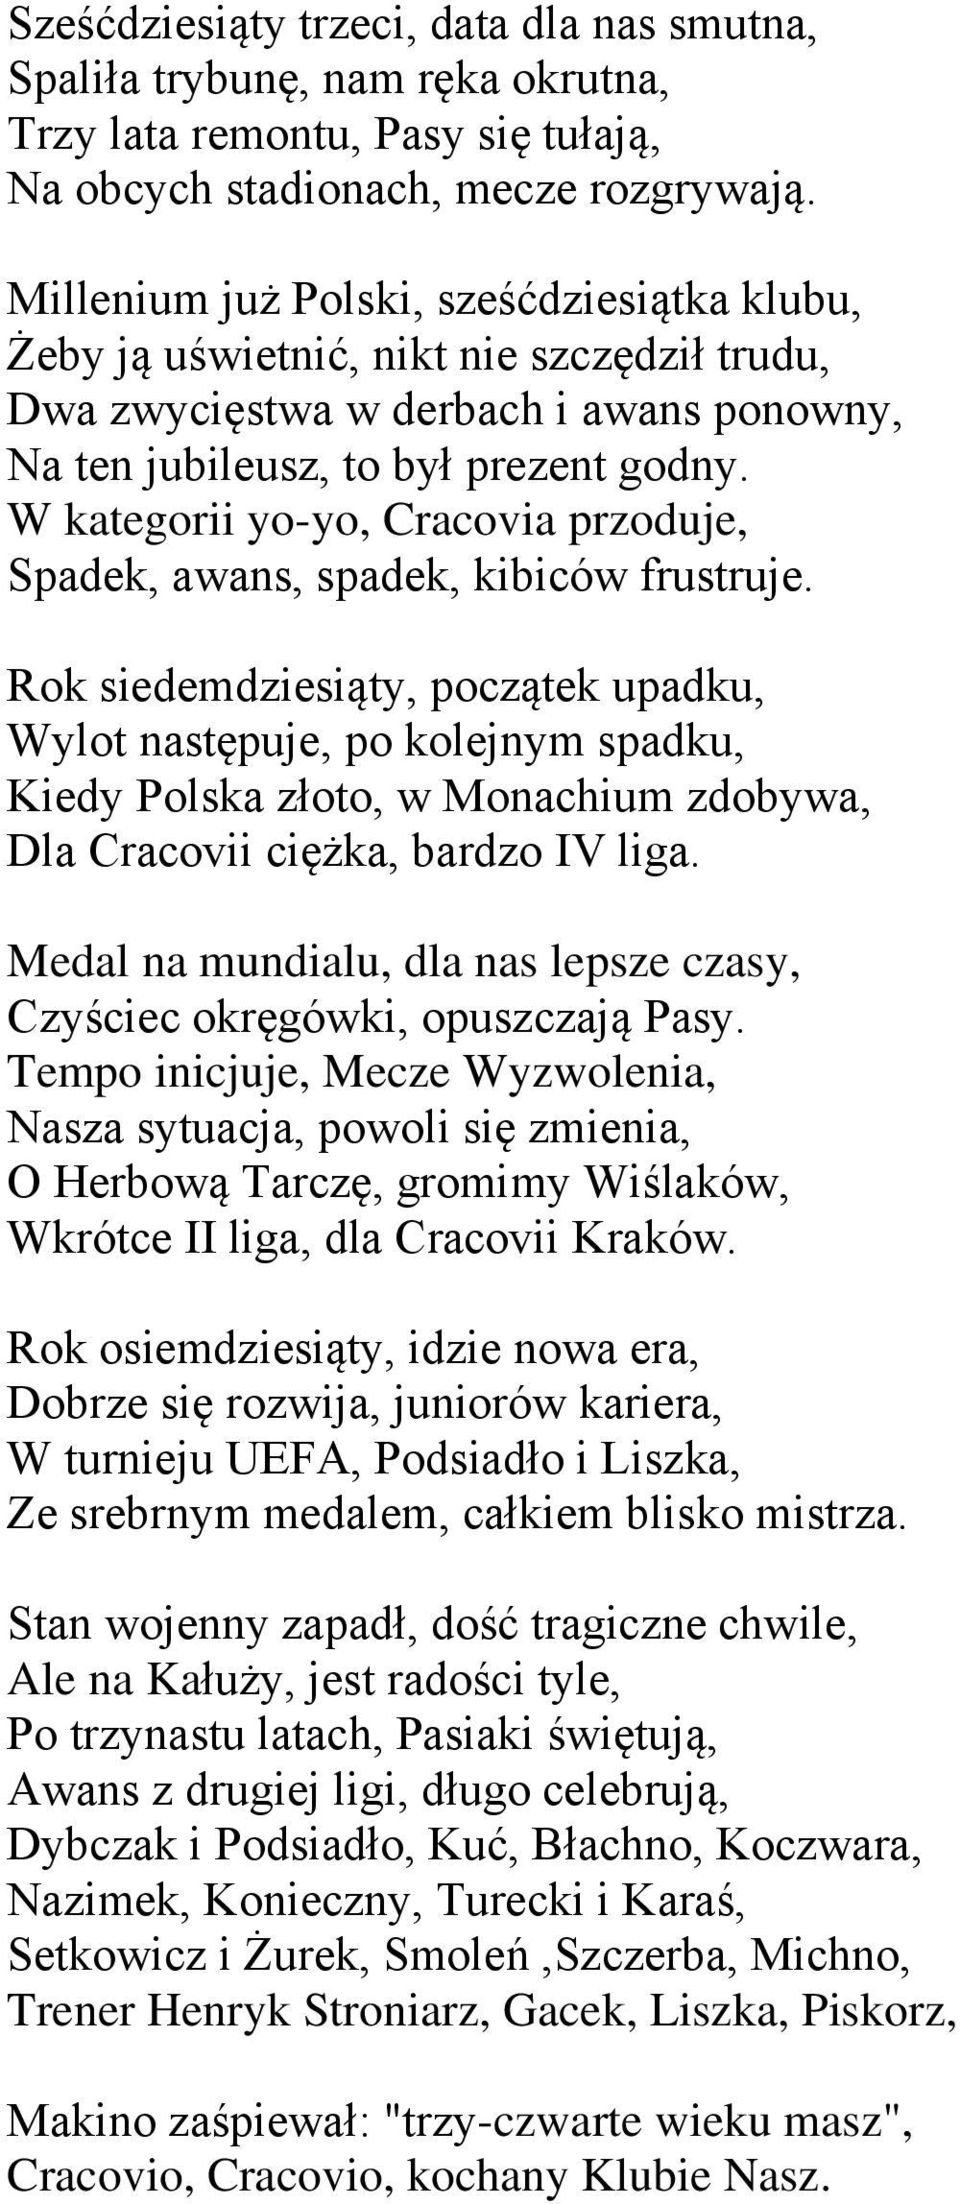 W kategorii yo-yo, Cracovia przoduje, Spadek, awans, spadek, kibiców frustruje.